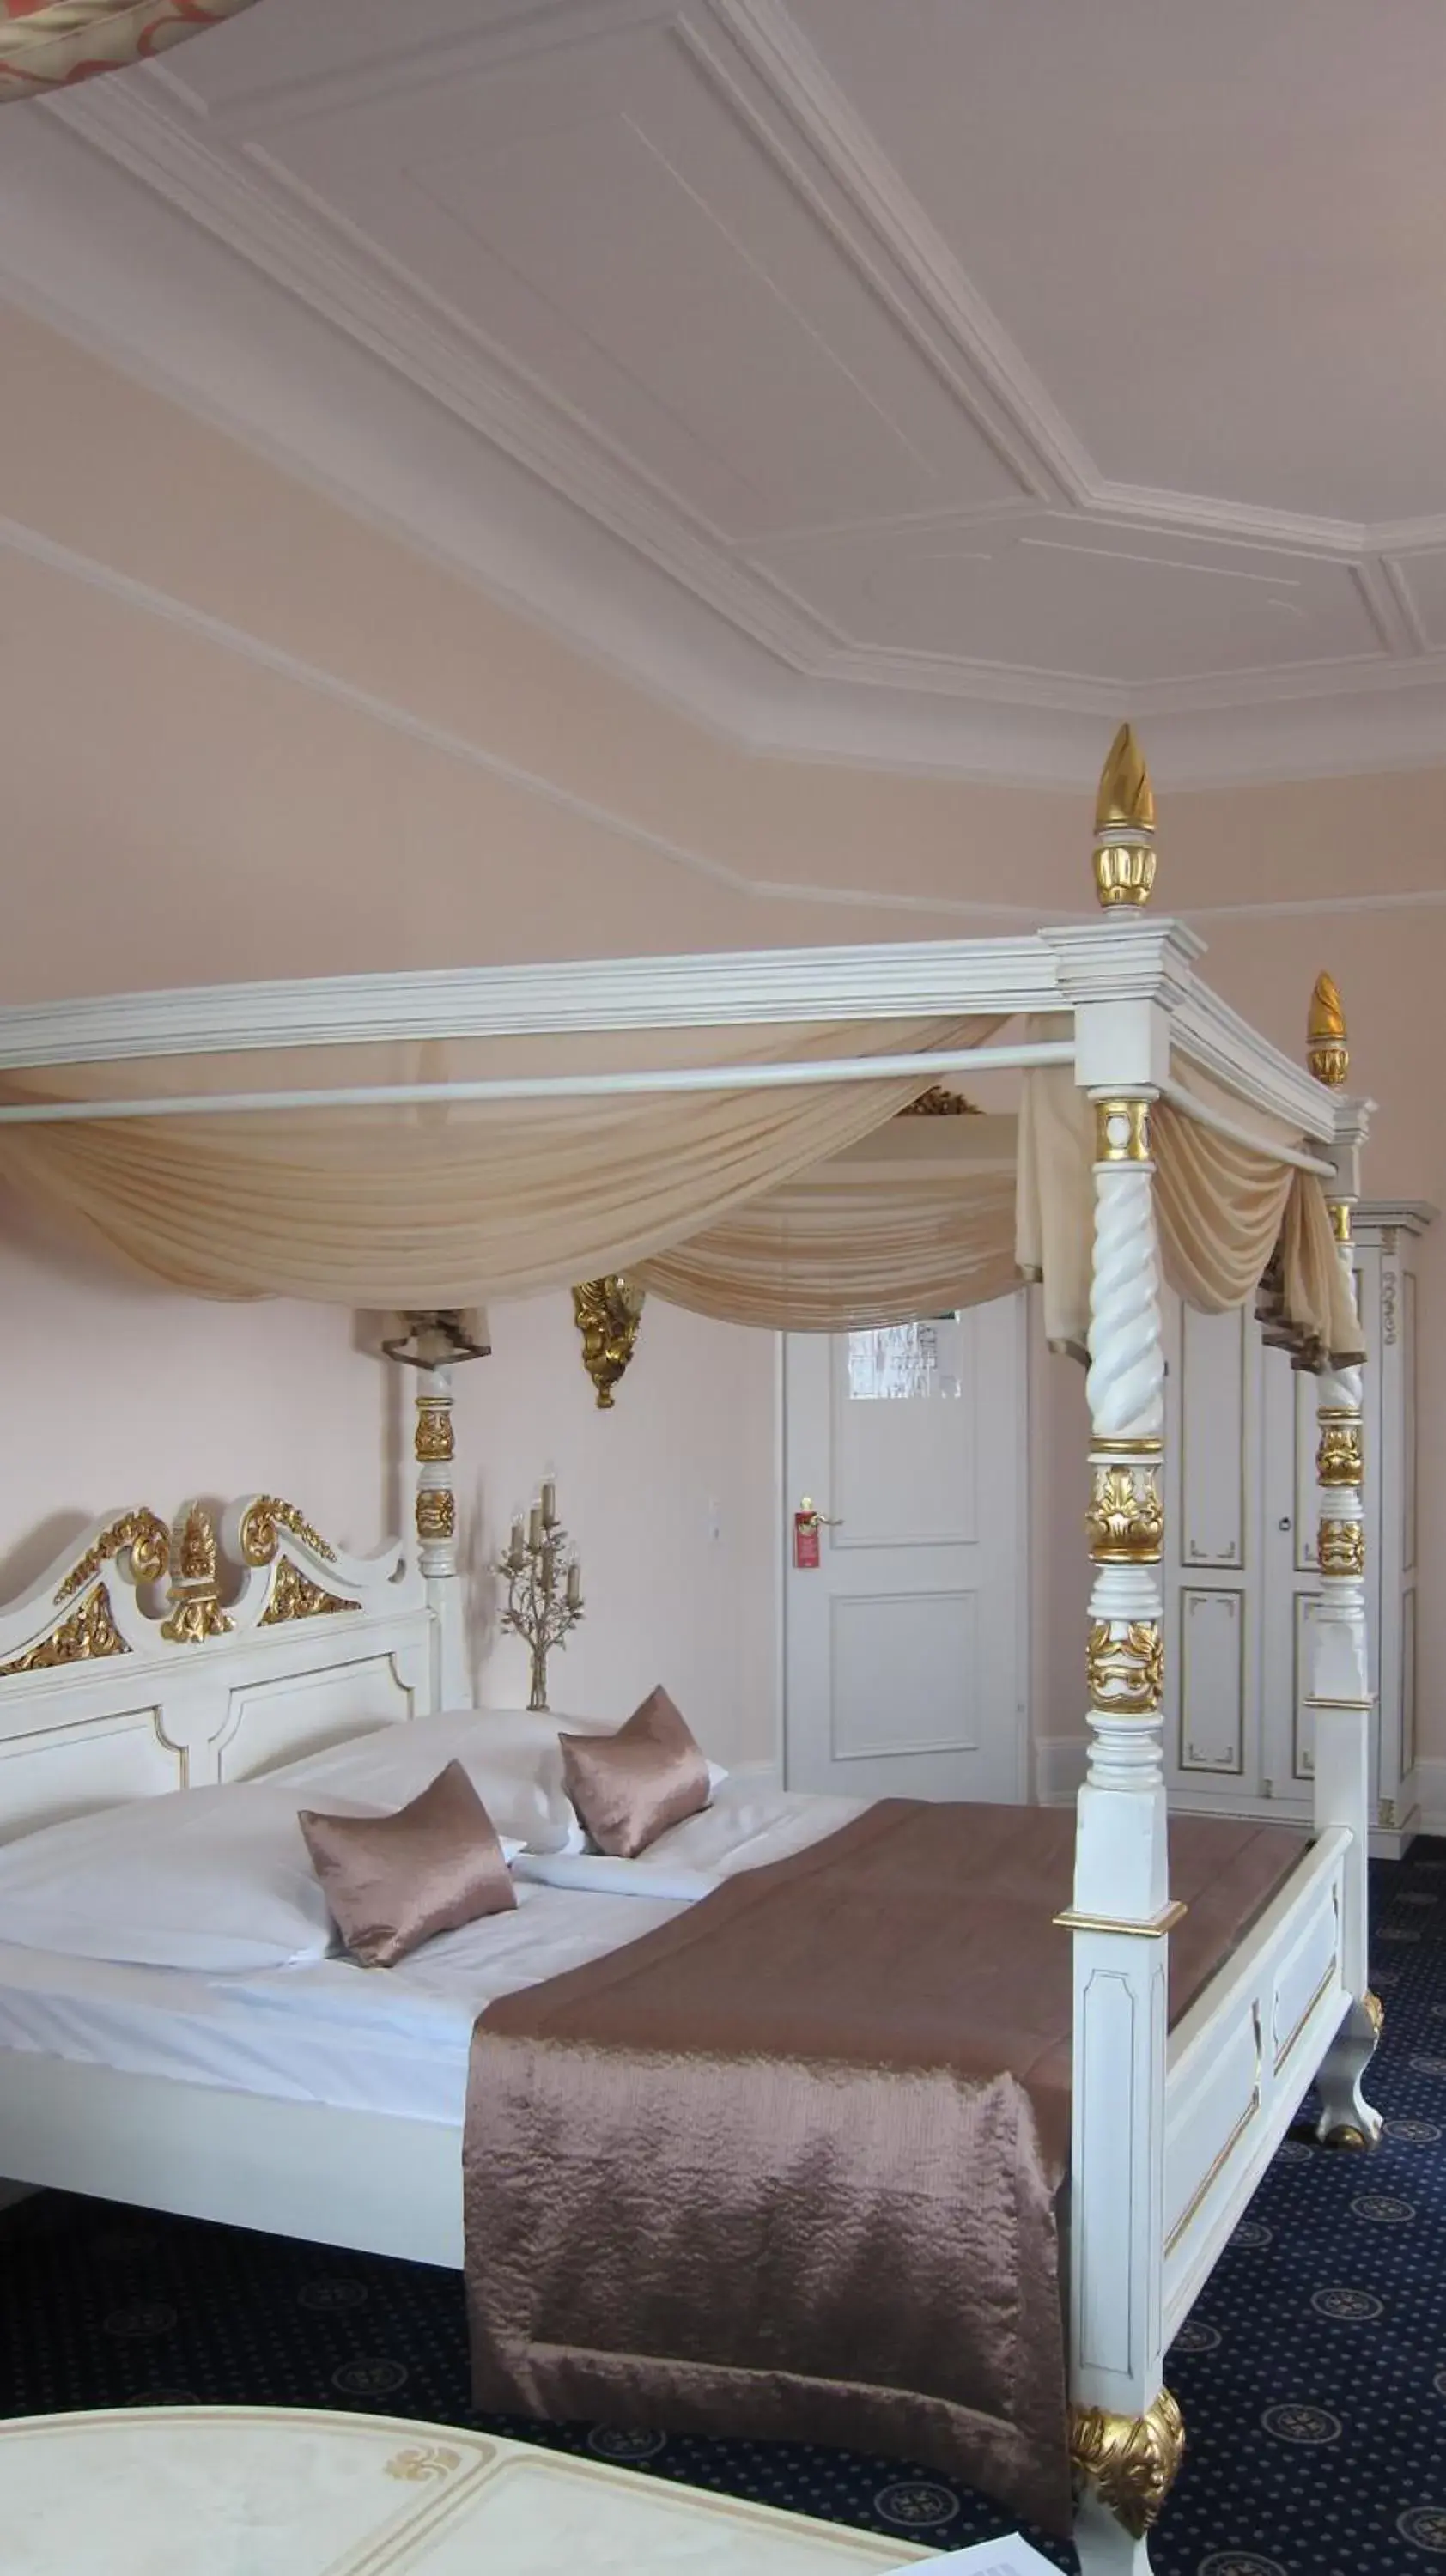 Suite - single occupancy in Schloss Hotel Wolfsbrunnen